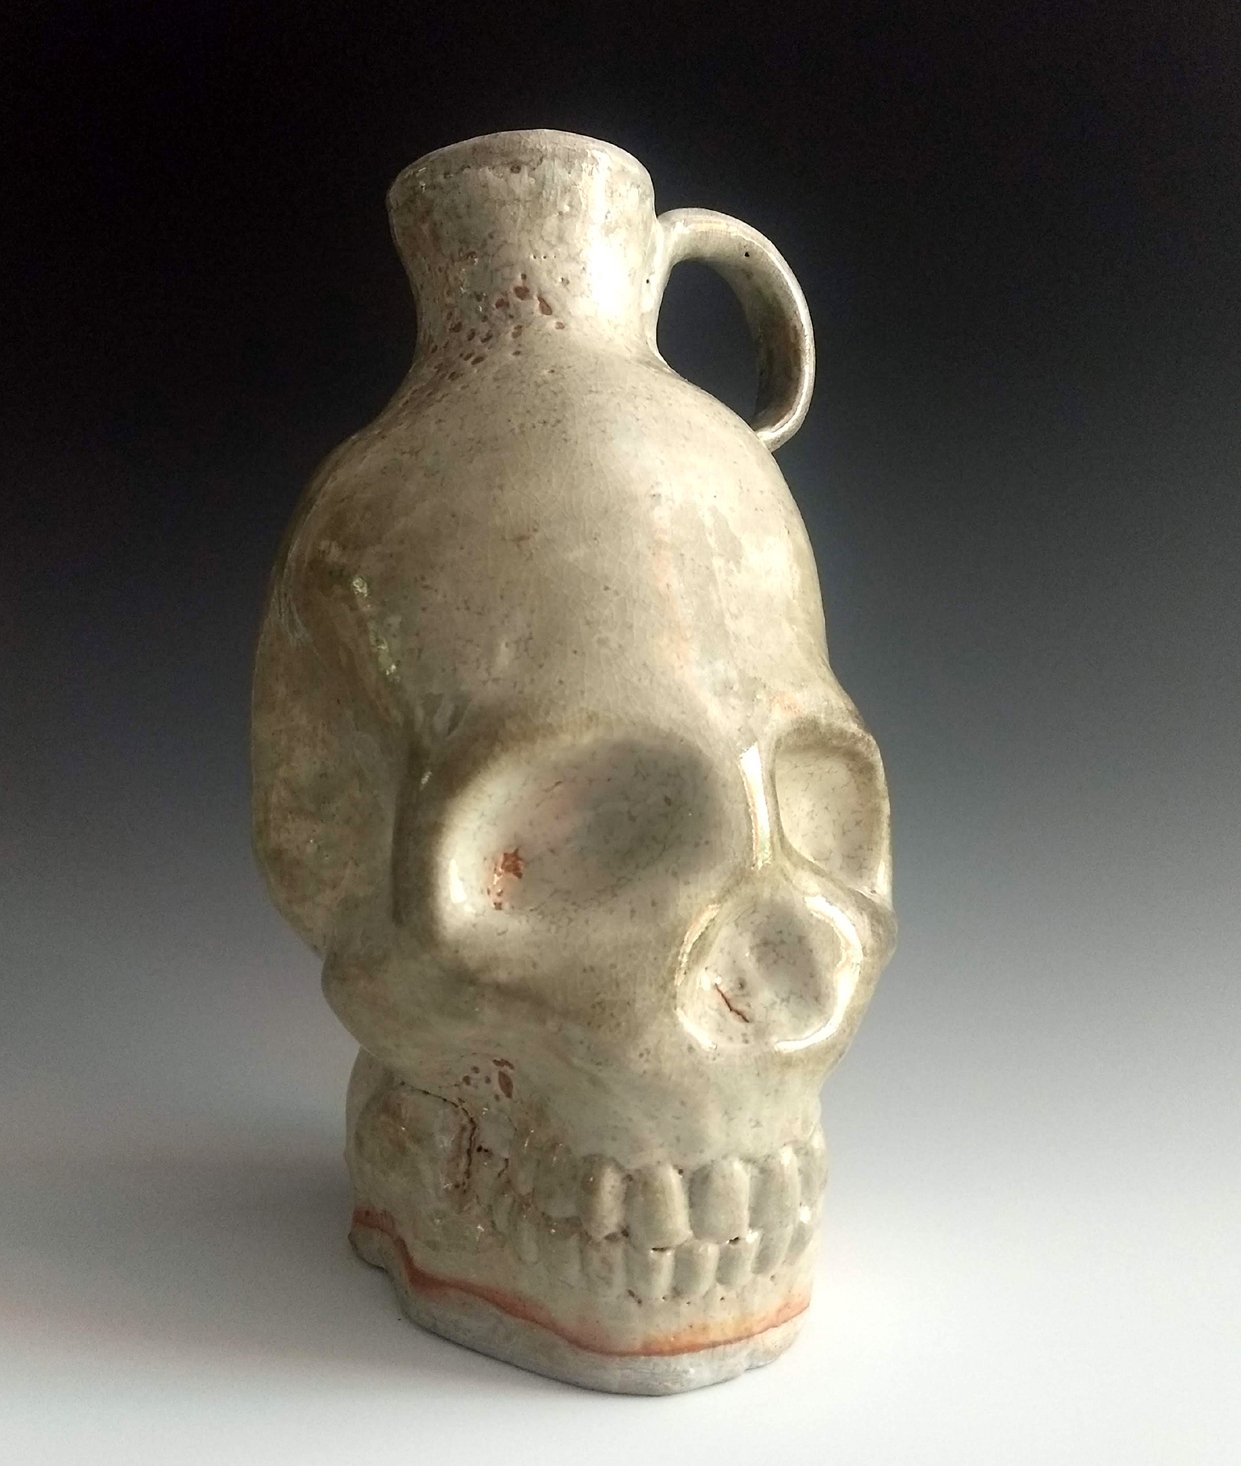    Skull Jug  , 10” x 5” x 5”, soda-fired ceramic 